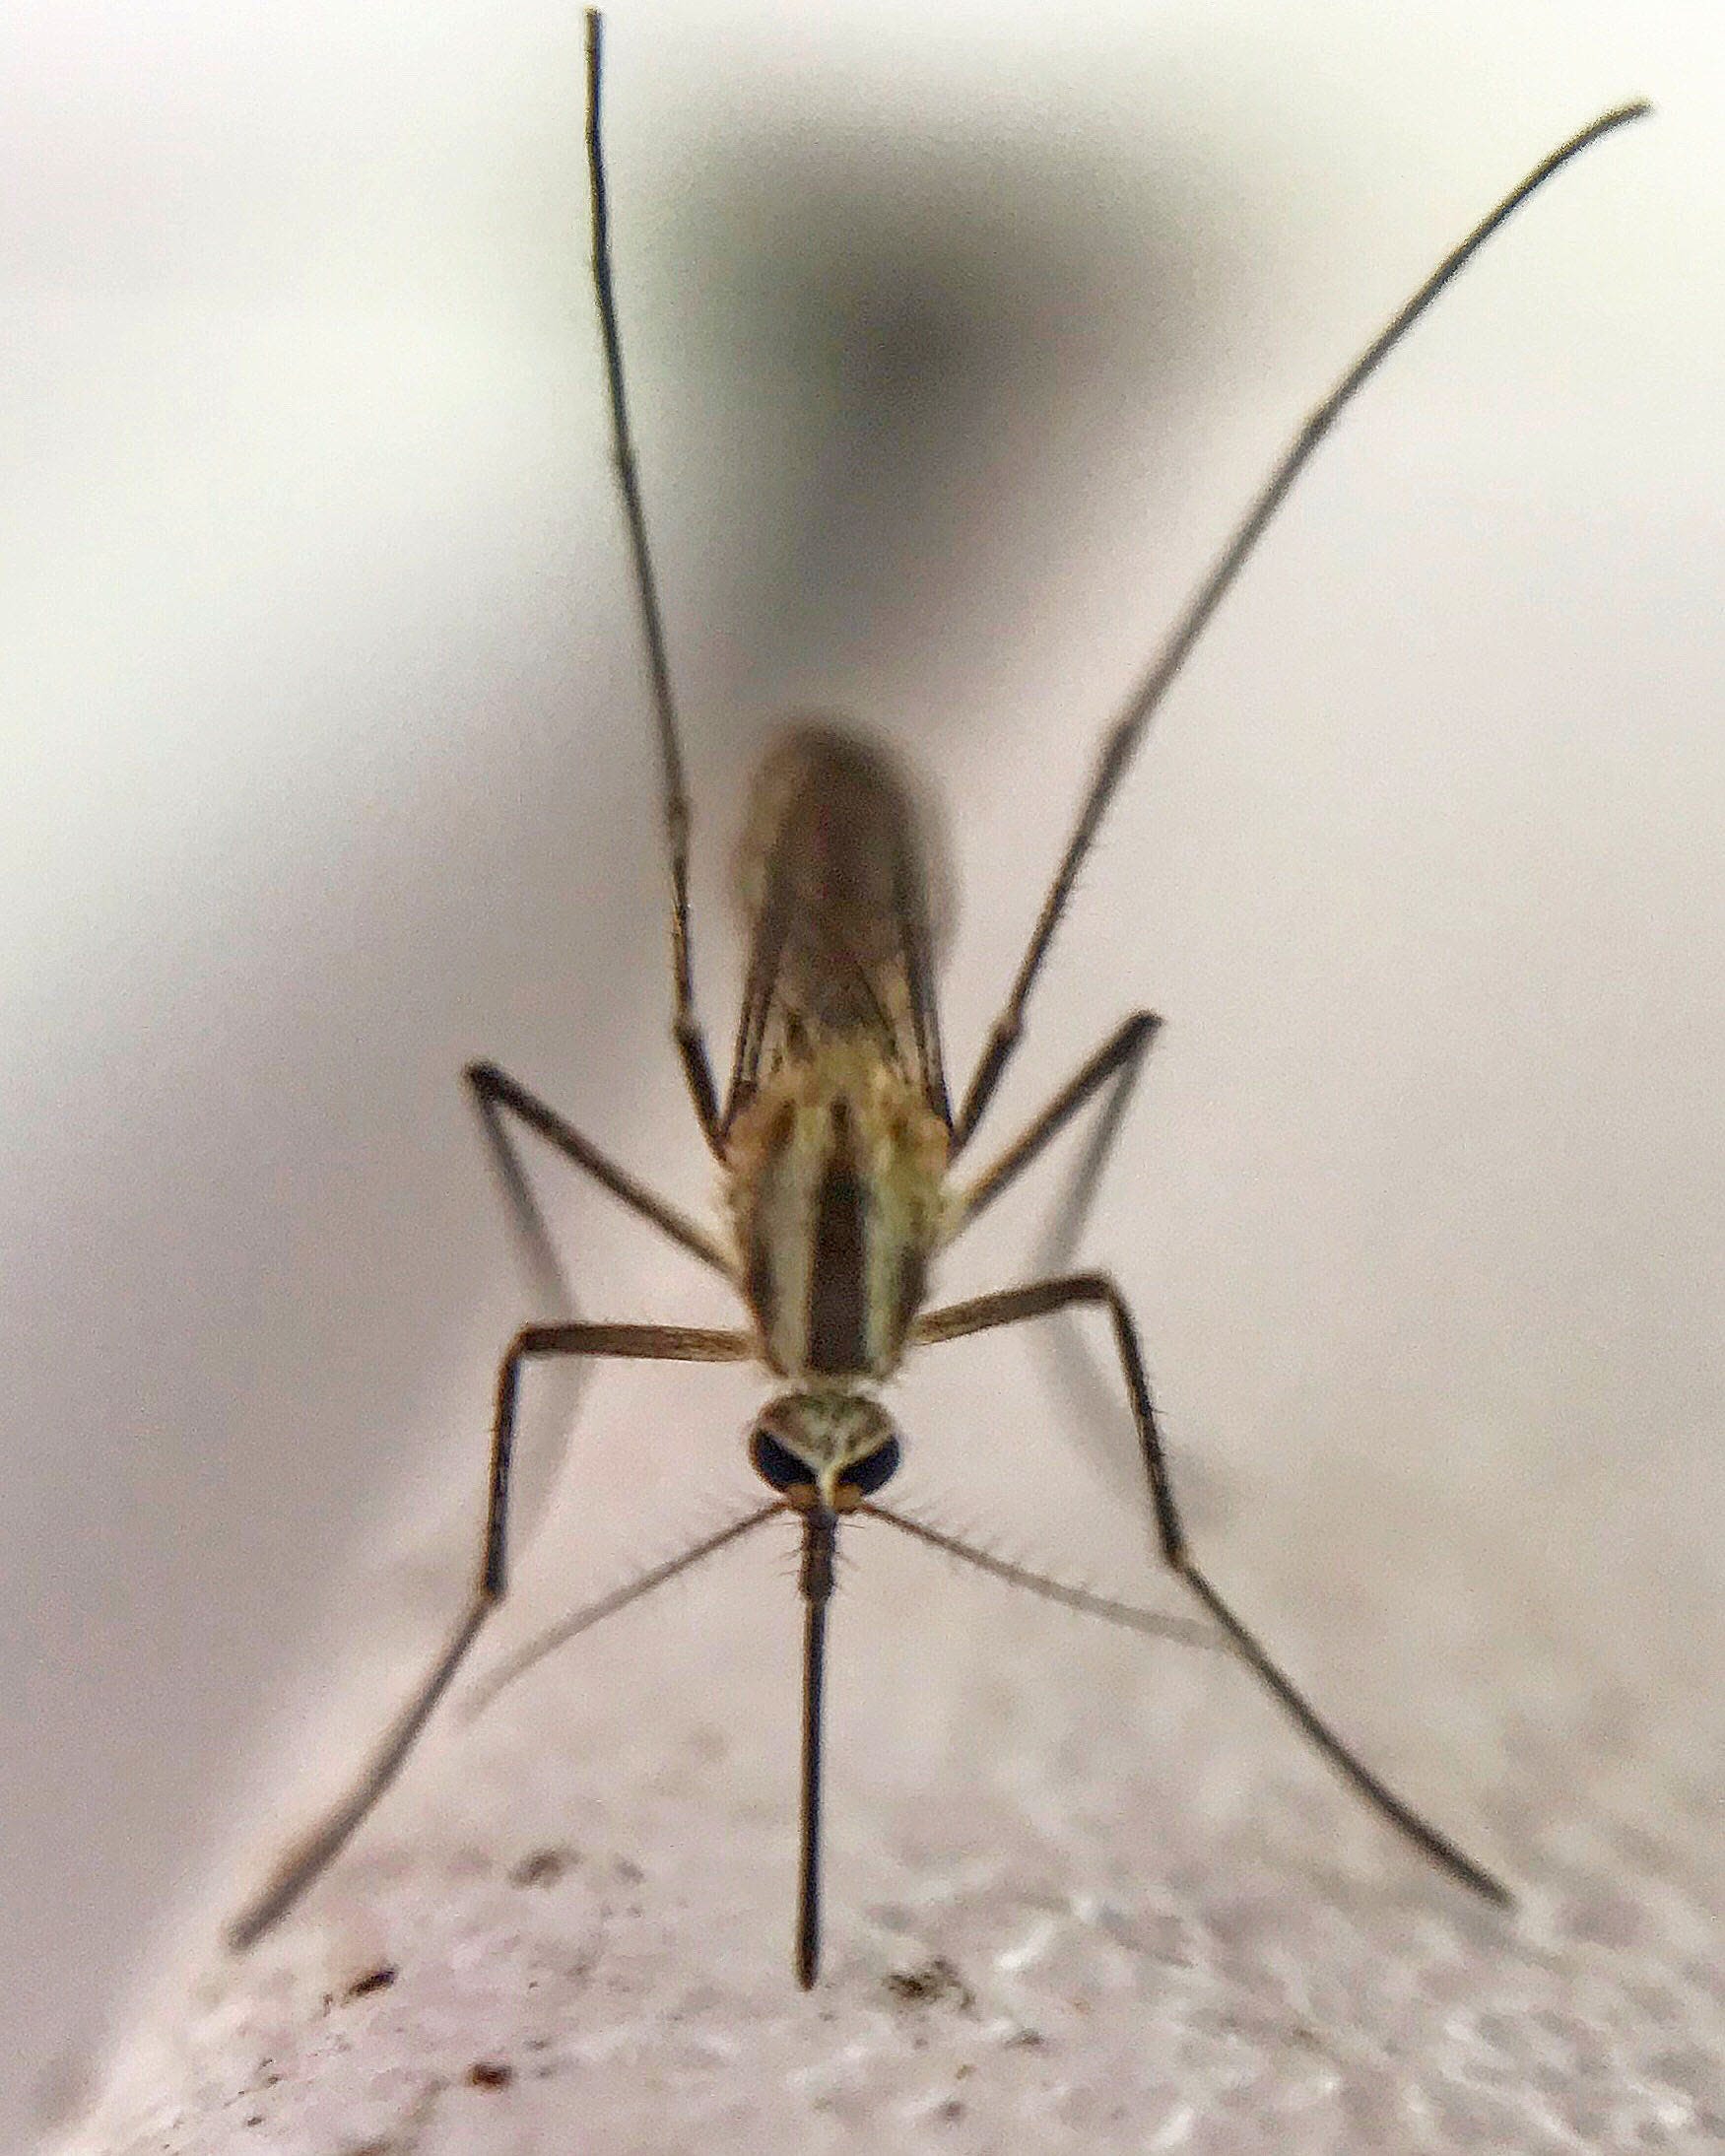 '12 types spread germs': Ohio EPA grants aim to reduce spread of mosquito-borne illnesses